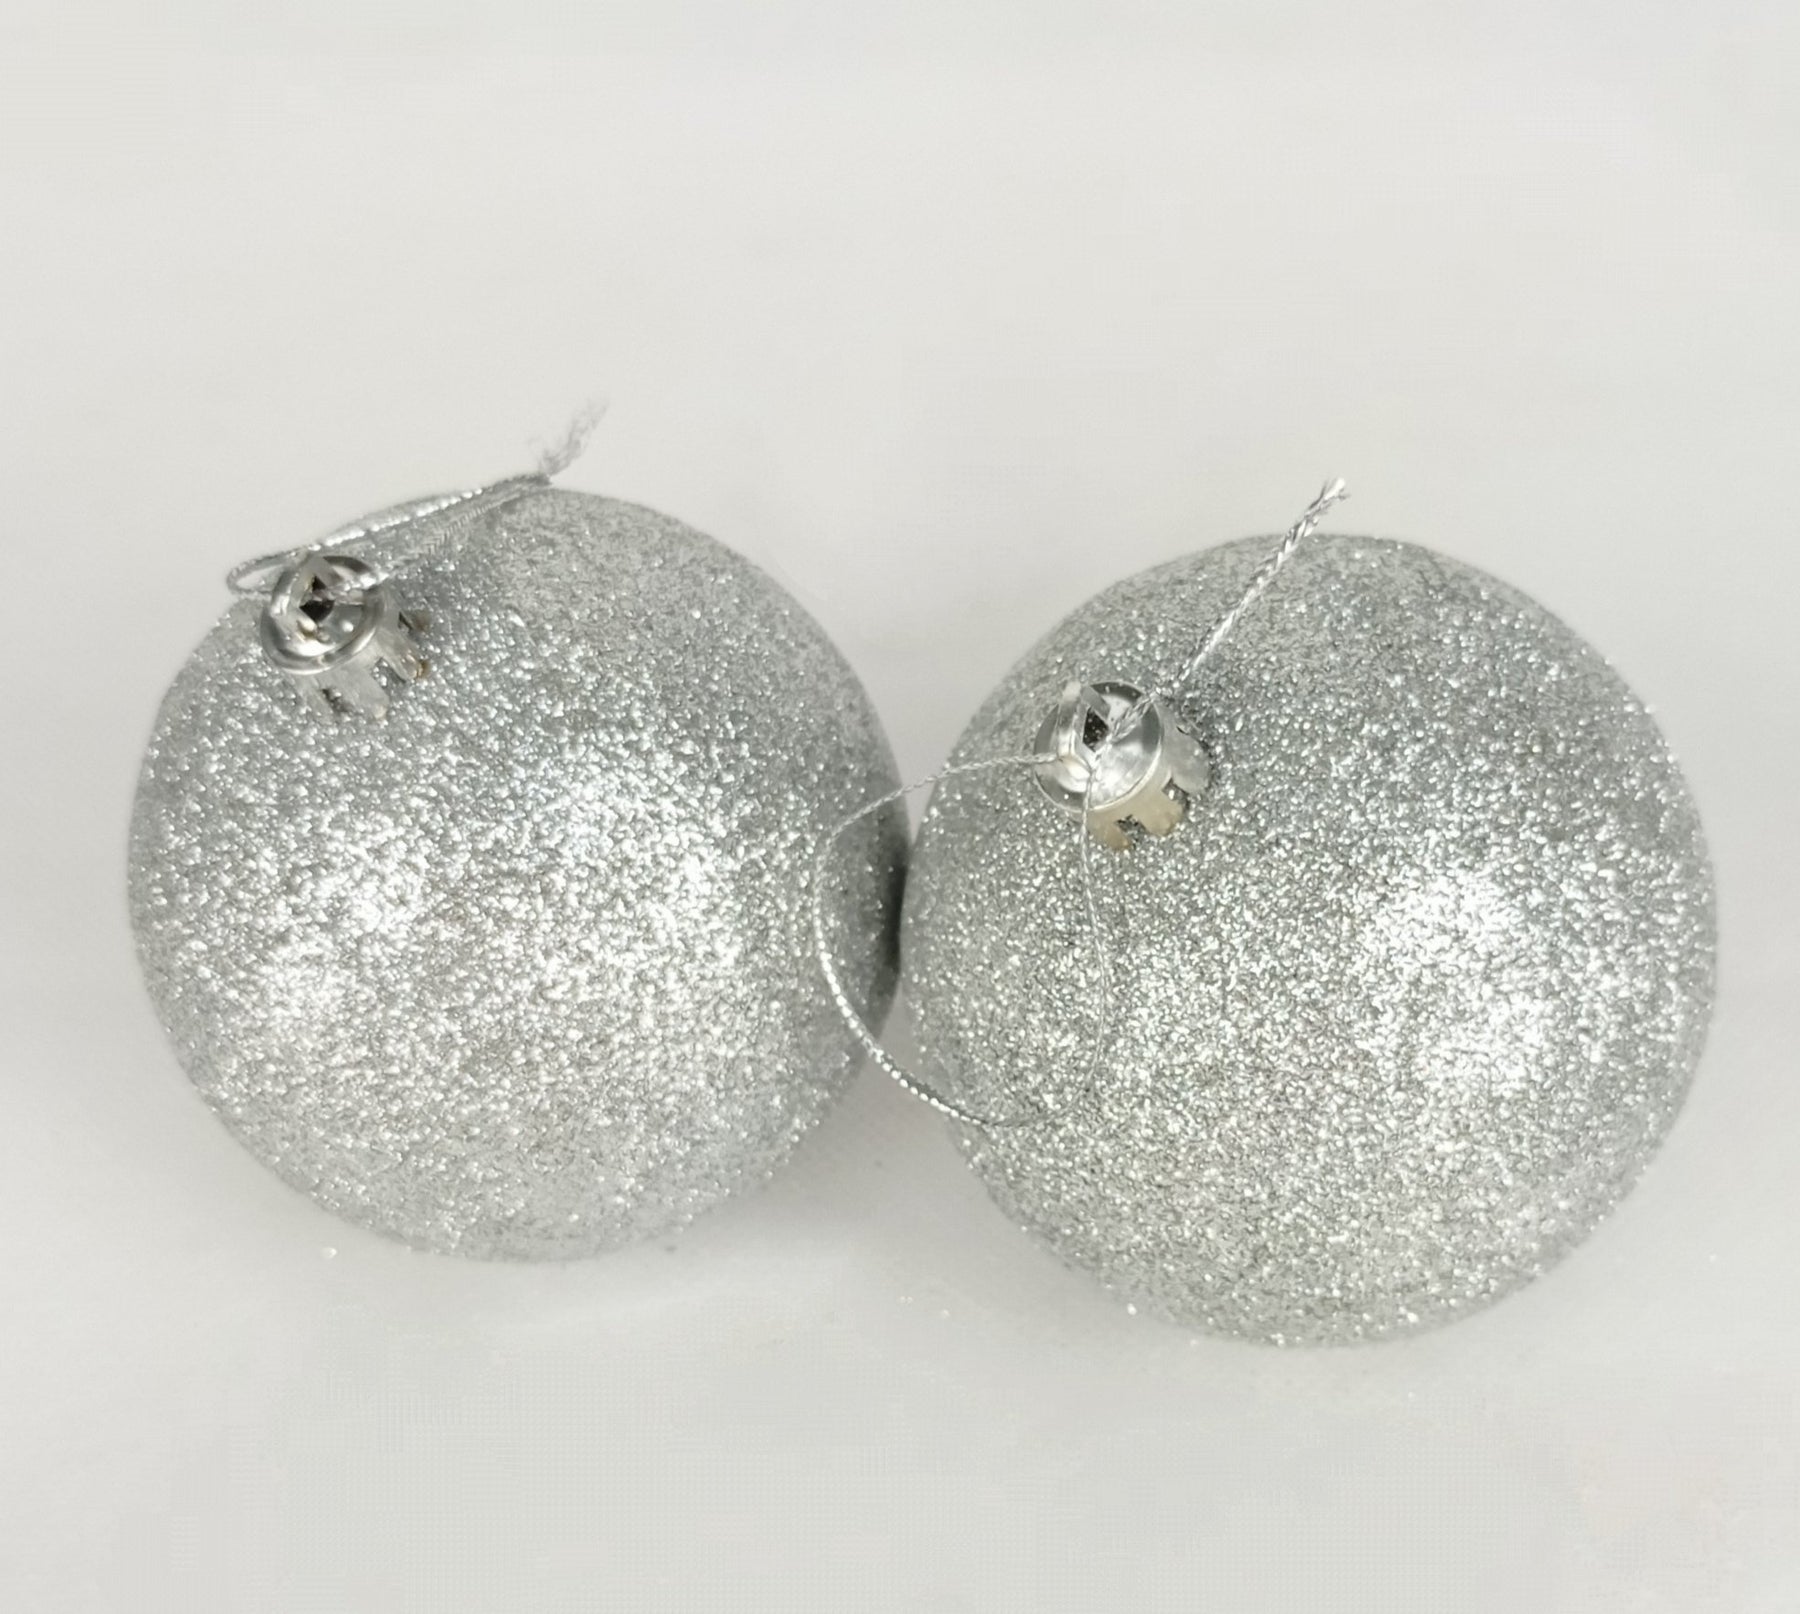 [BUY 1 FREE 1] Christmas Ornaments - Silver Ball (2 pcs)